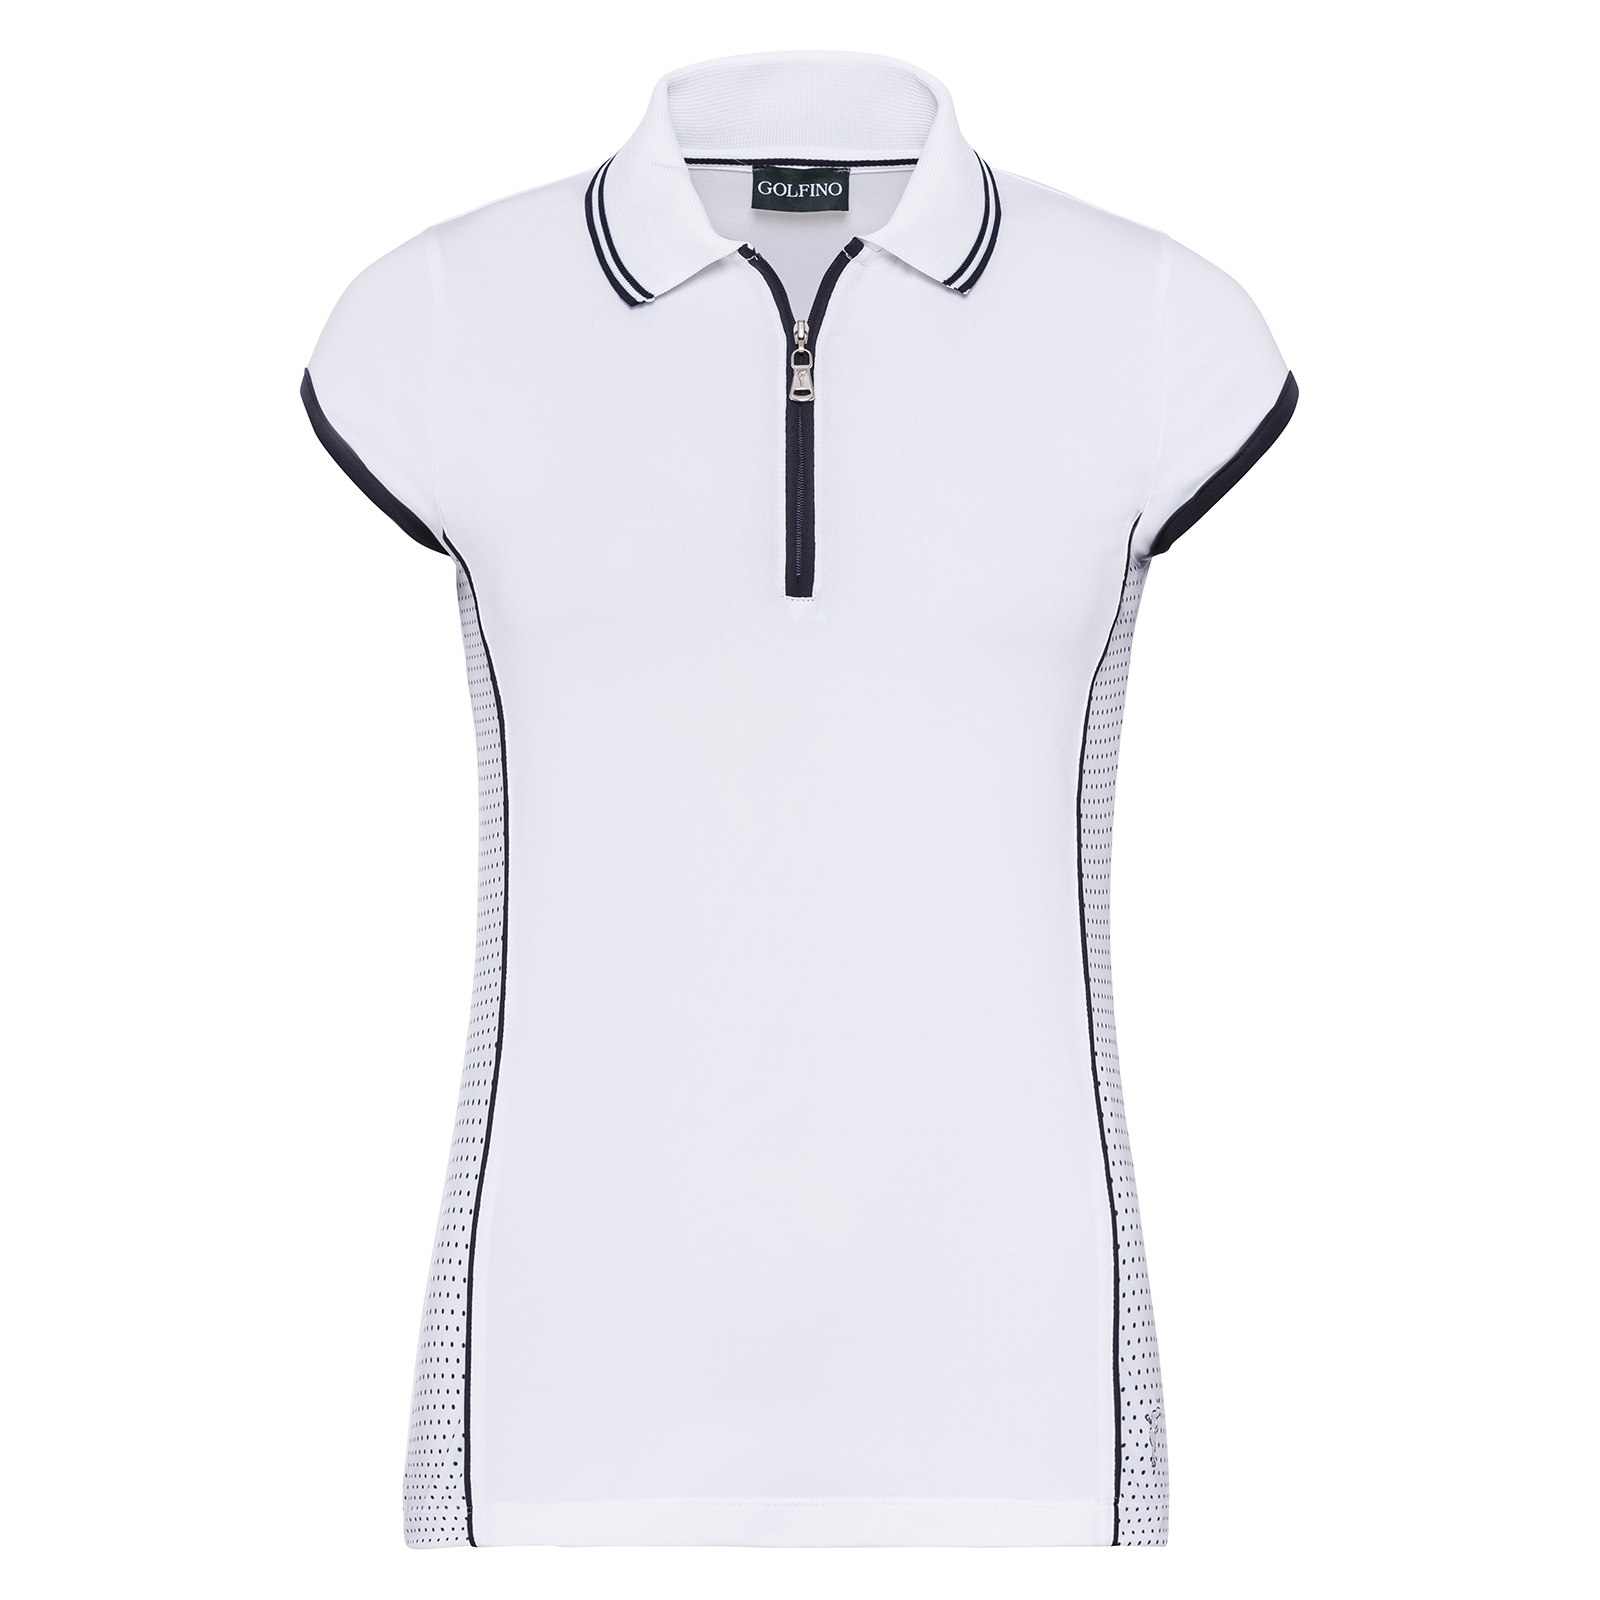 Ladies' modern, figure-flattering golf polo shirt 